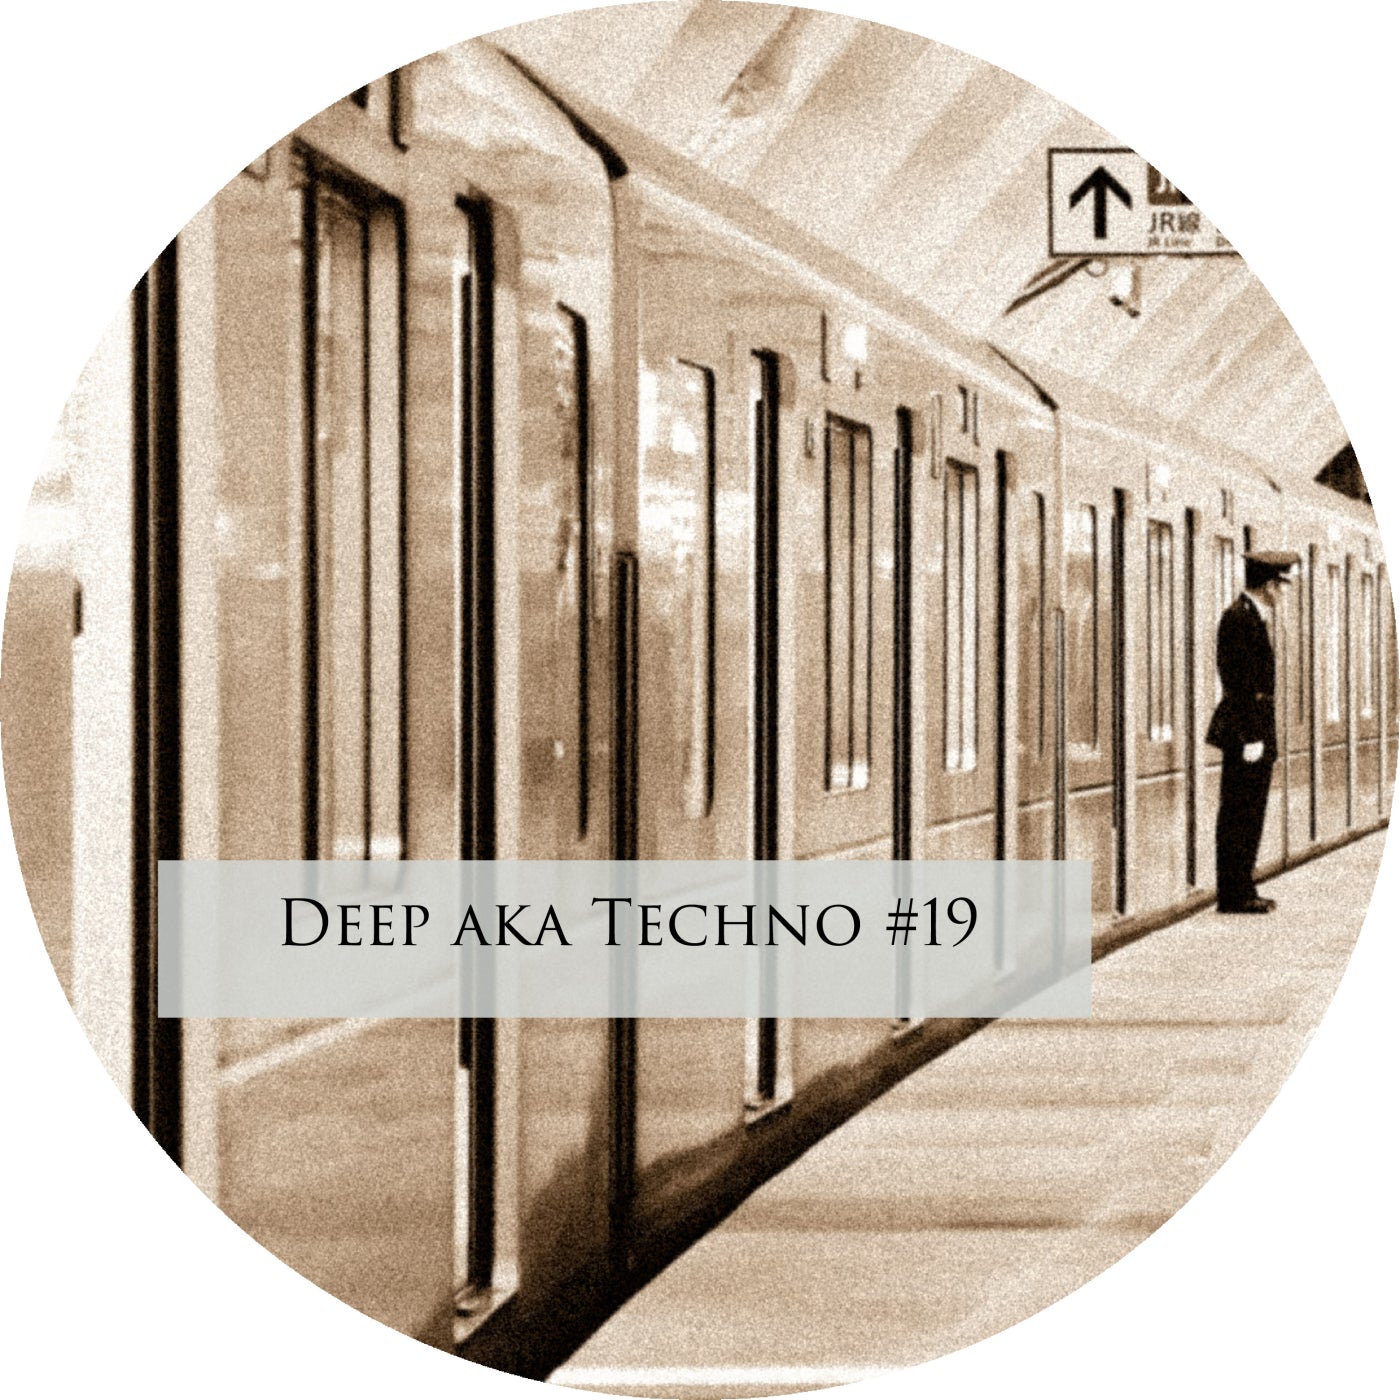 Deep Aka Techno #19